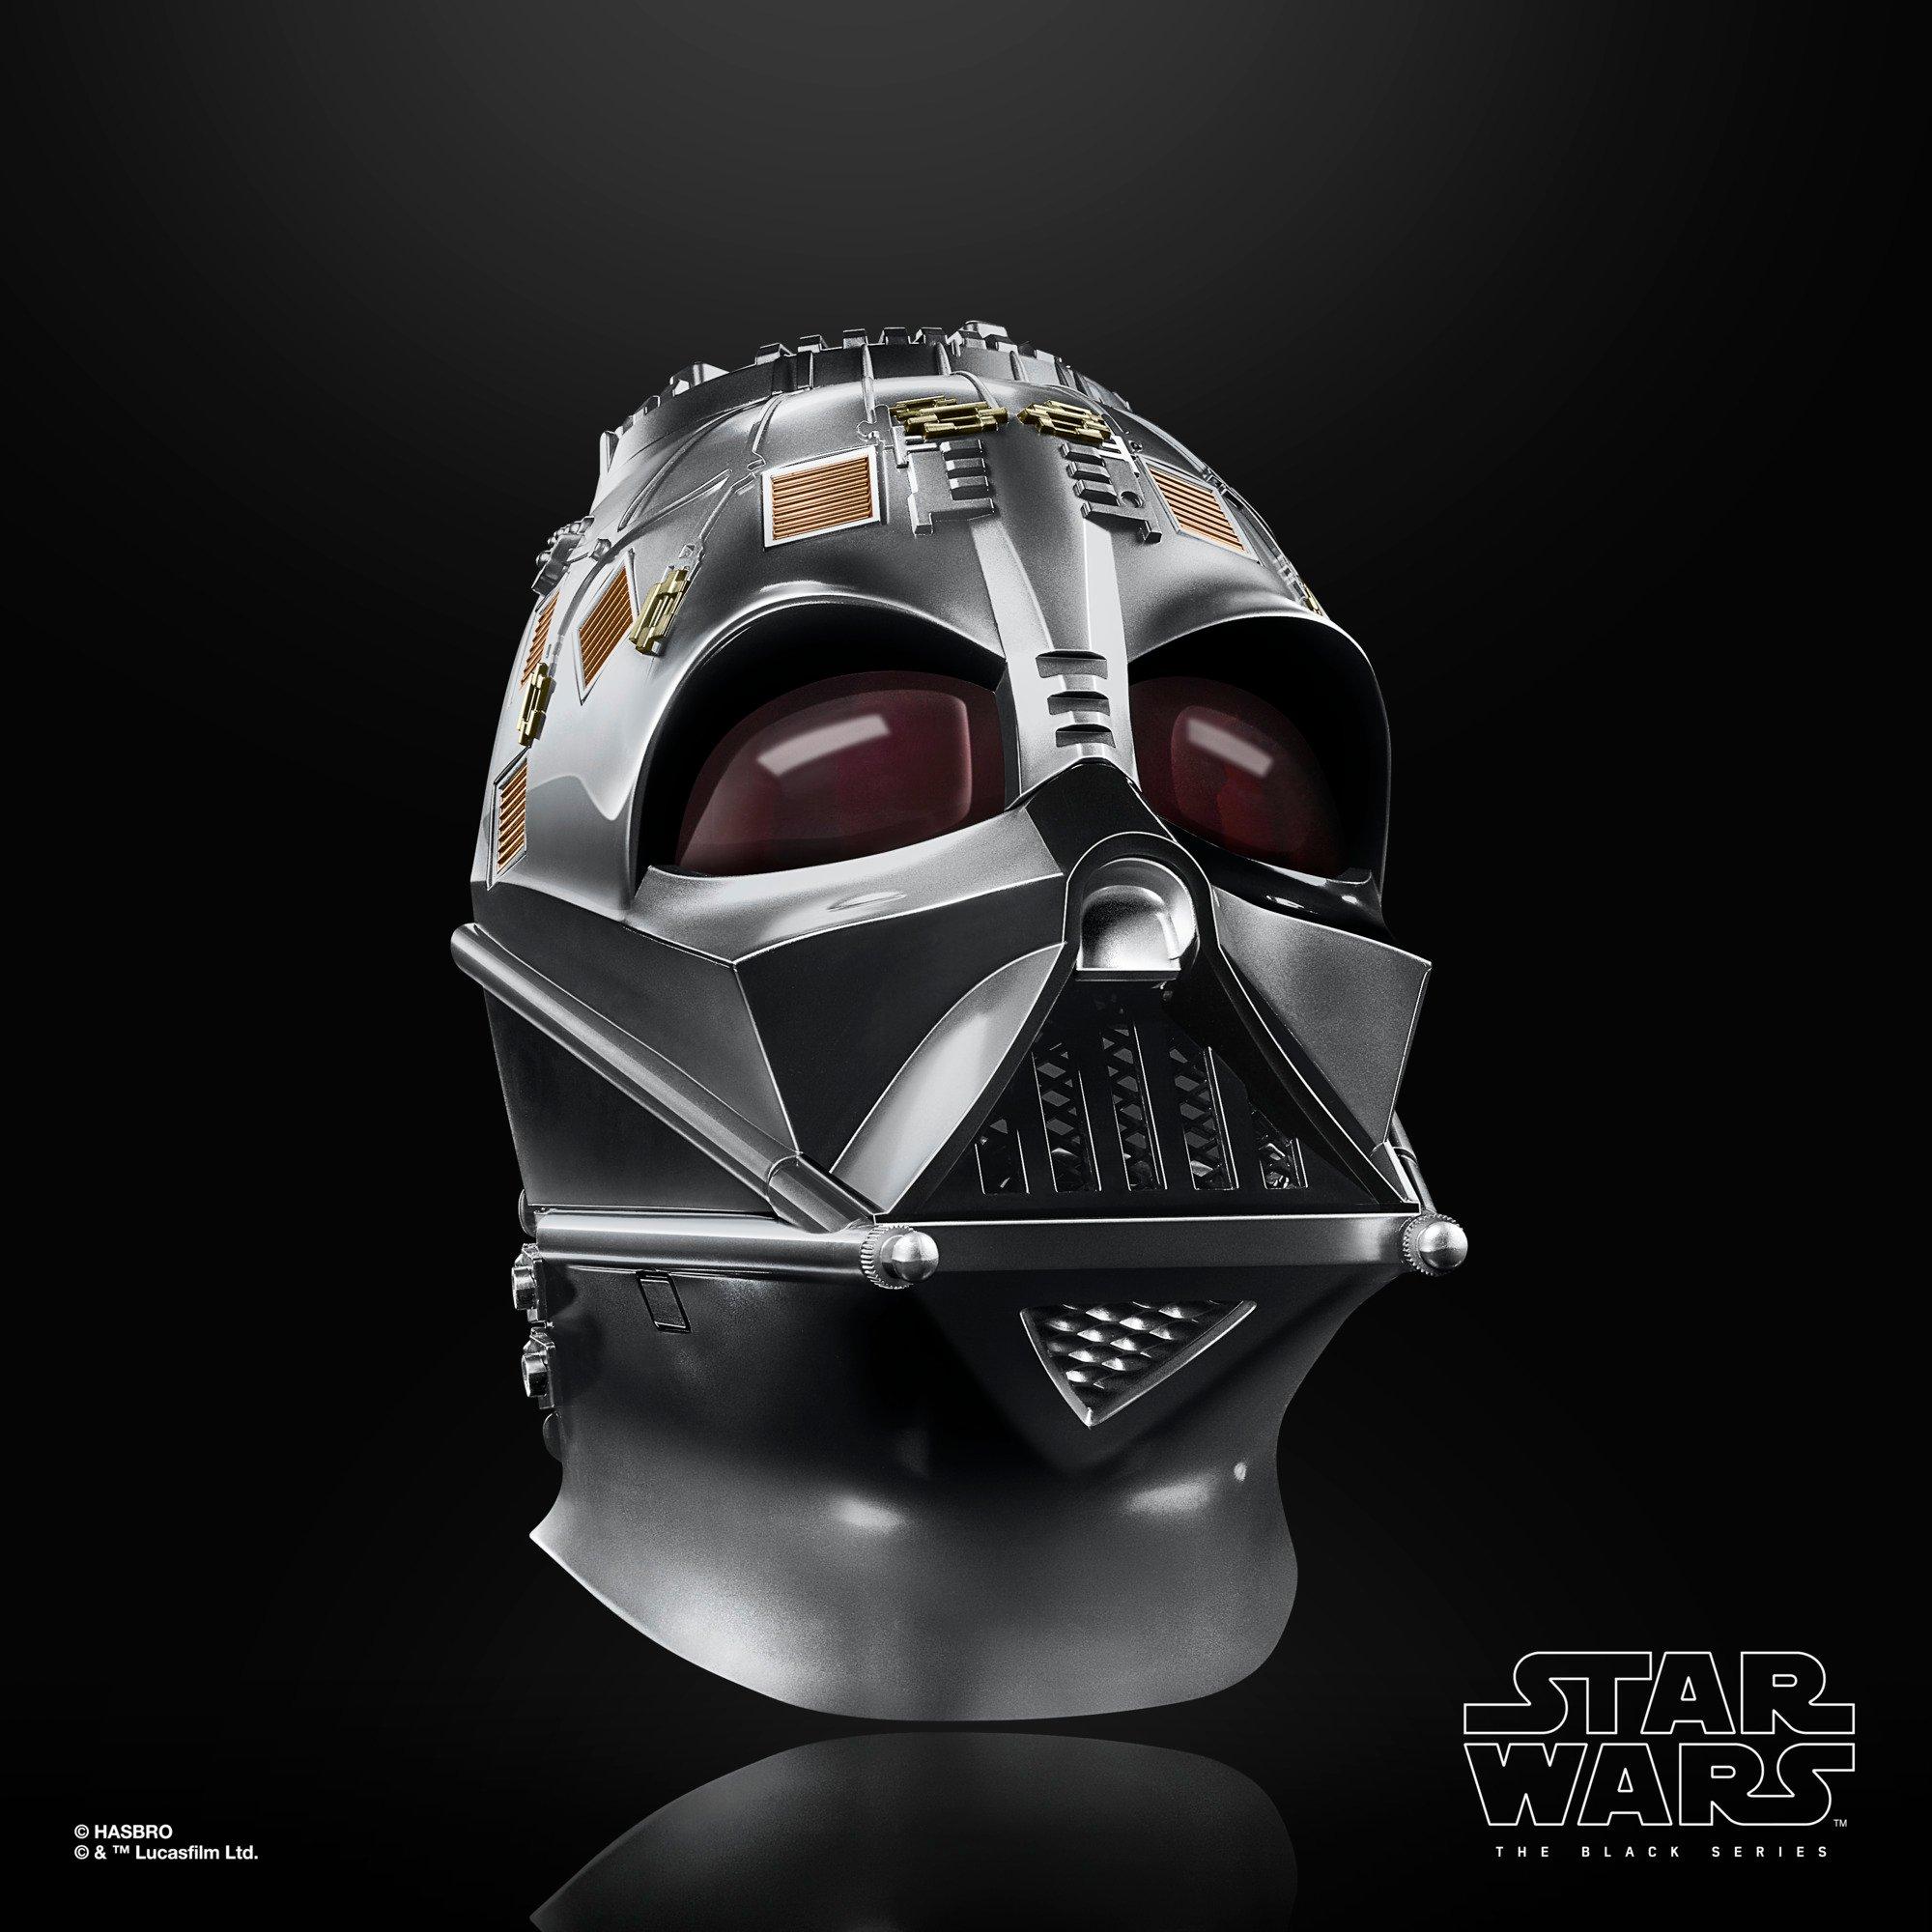 https://media.gamestop.com/i/gamestop/11178754_ALT05/Hasbro-Star-Wars-The-Black-Series-Darth-Vader-Premium-Electronic-Helmet?$pdp$